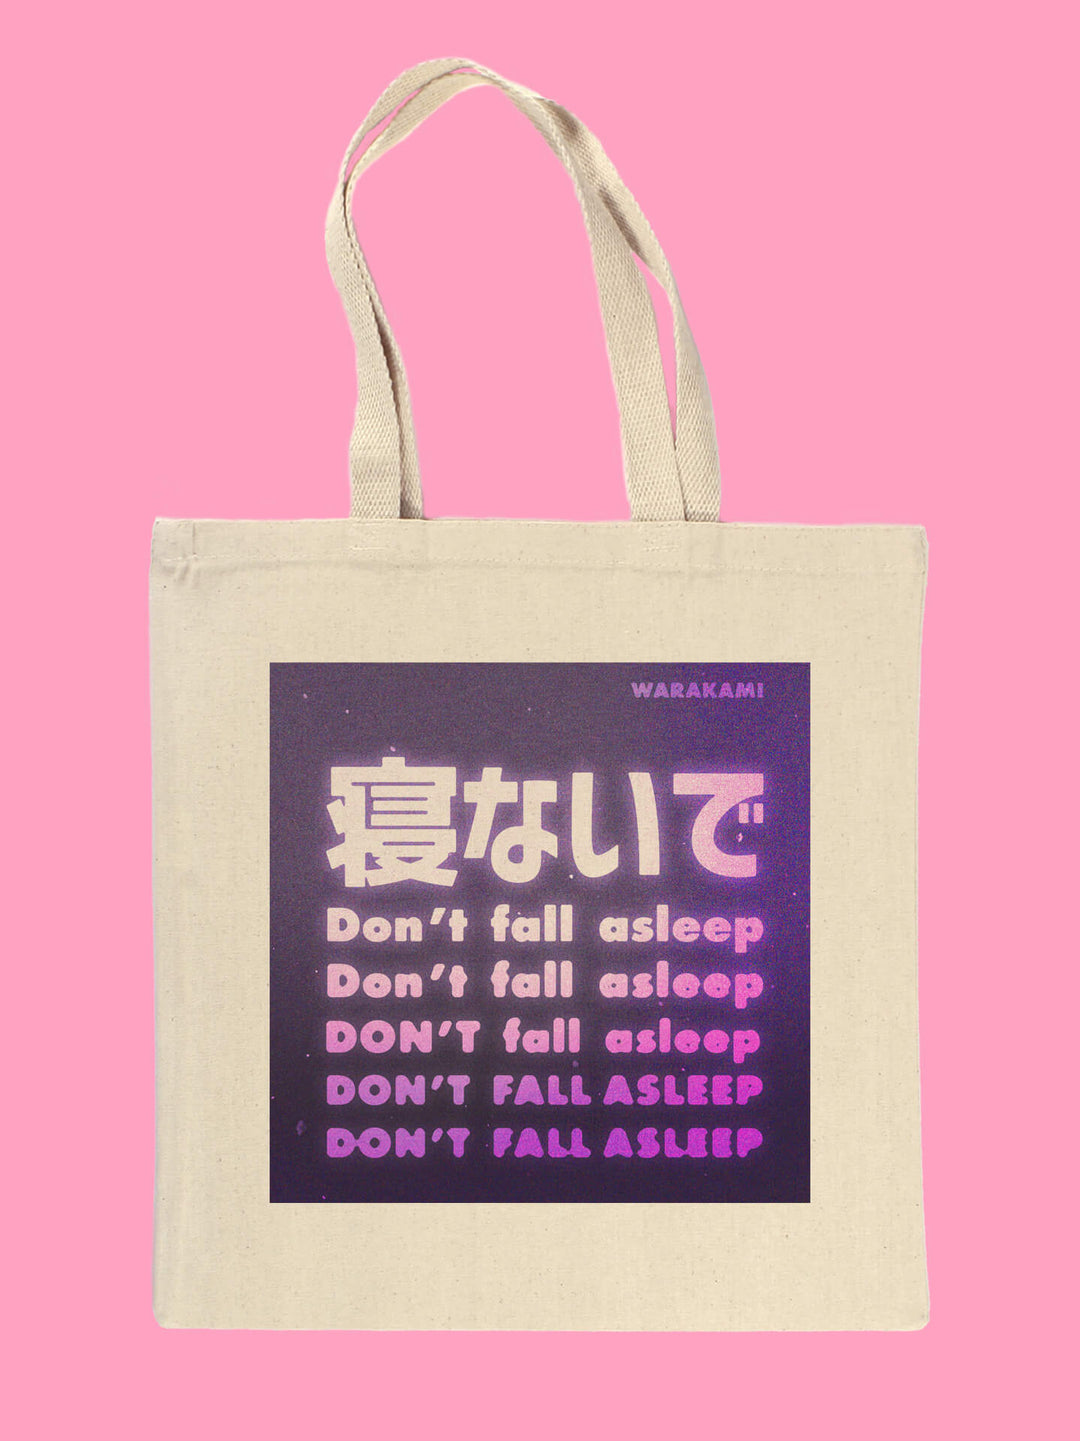 Japanese vaporwave retrowave aesthetic canvas book bag.